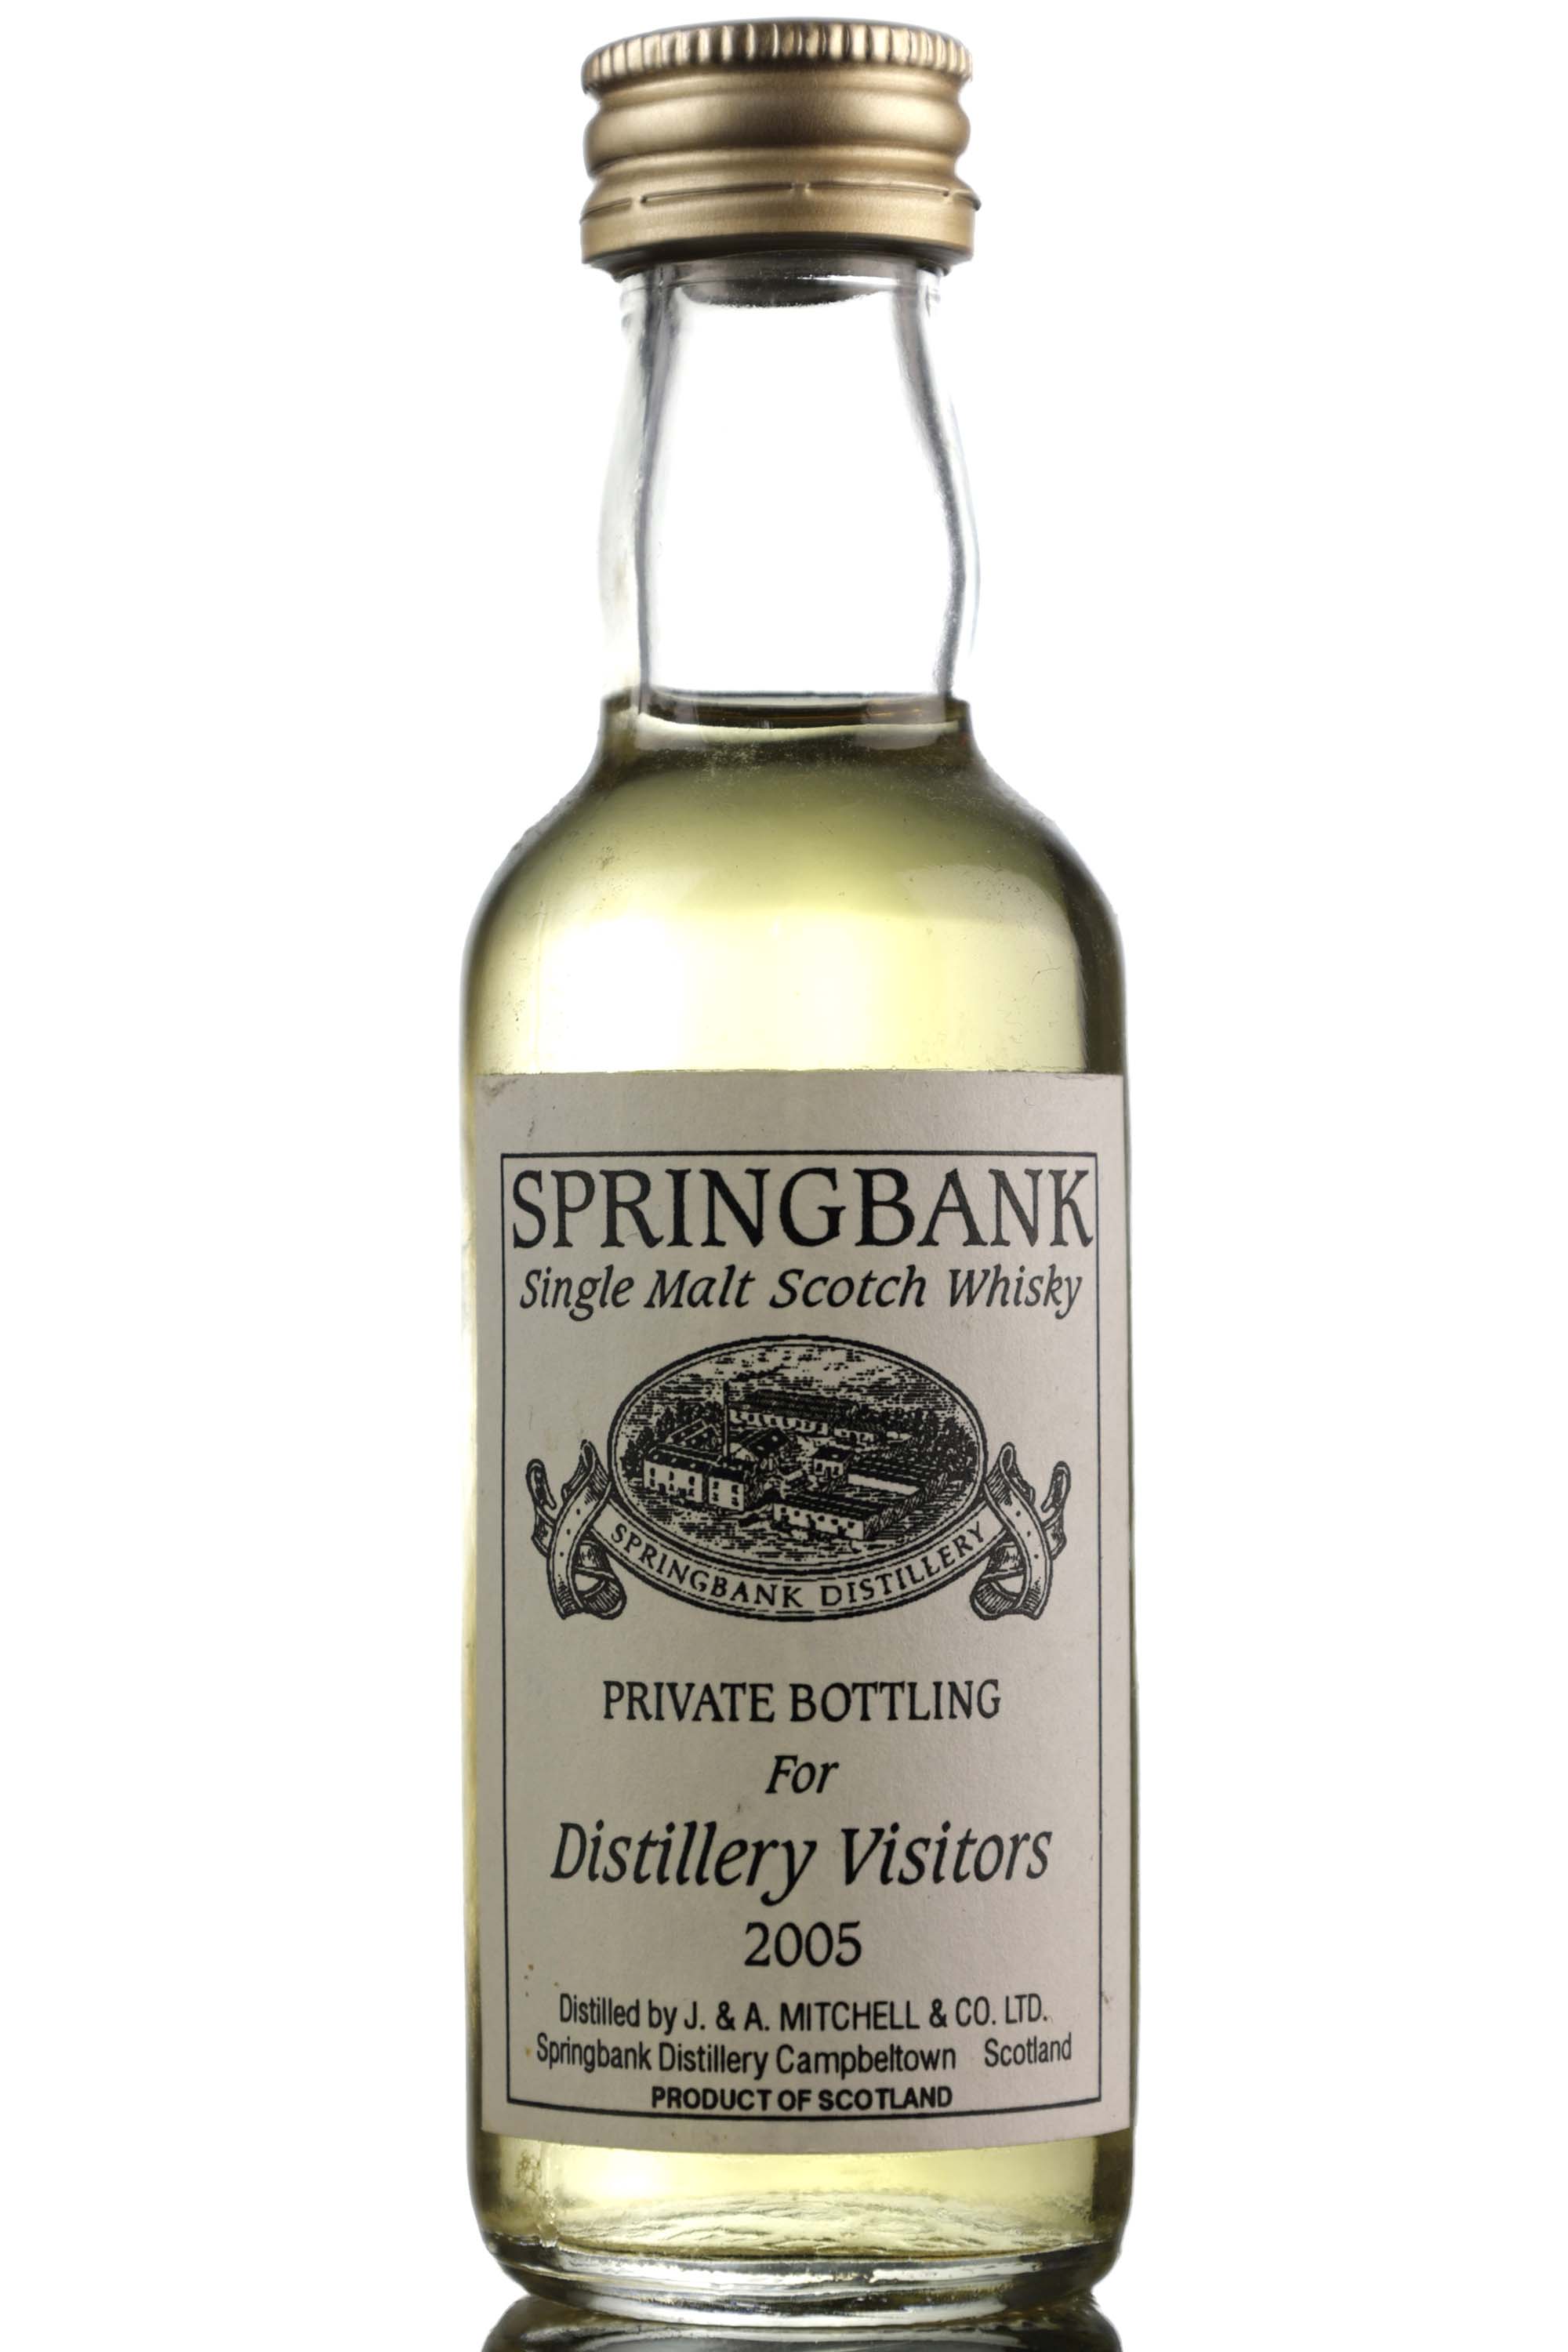 Springbank Private Bottling For Distillery Visitors 2005 - Miniature